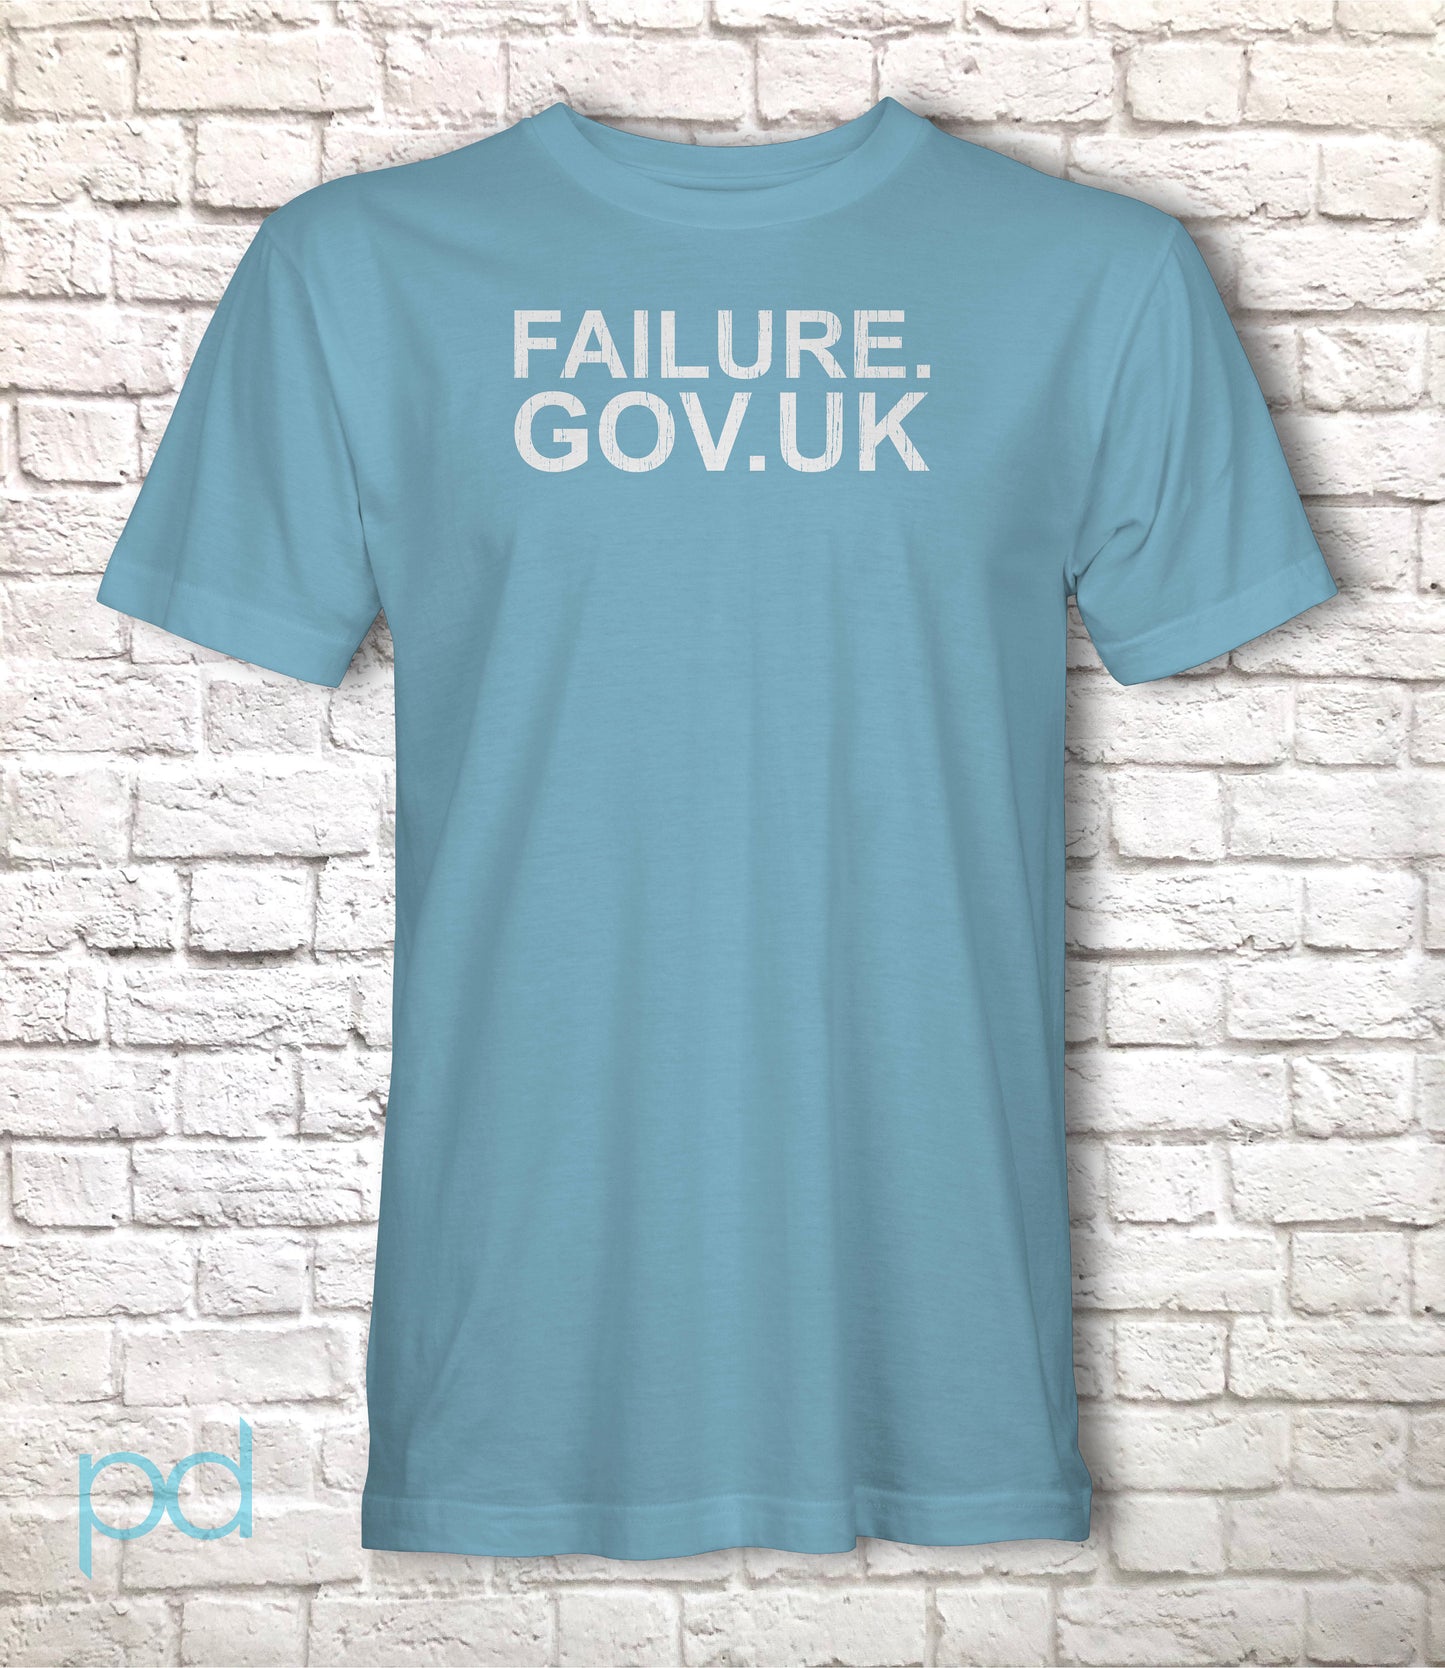 Anti-Government T-Shirt, Tory Failure Tee Shirt, Tories & Conservative Epic Fail failure.gov.uk, Unisex Short Sleeve Graphic Print Top